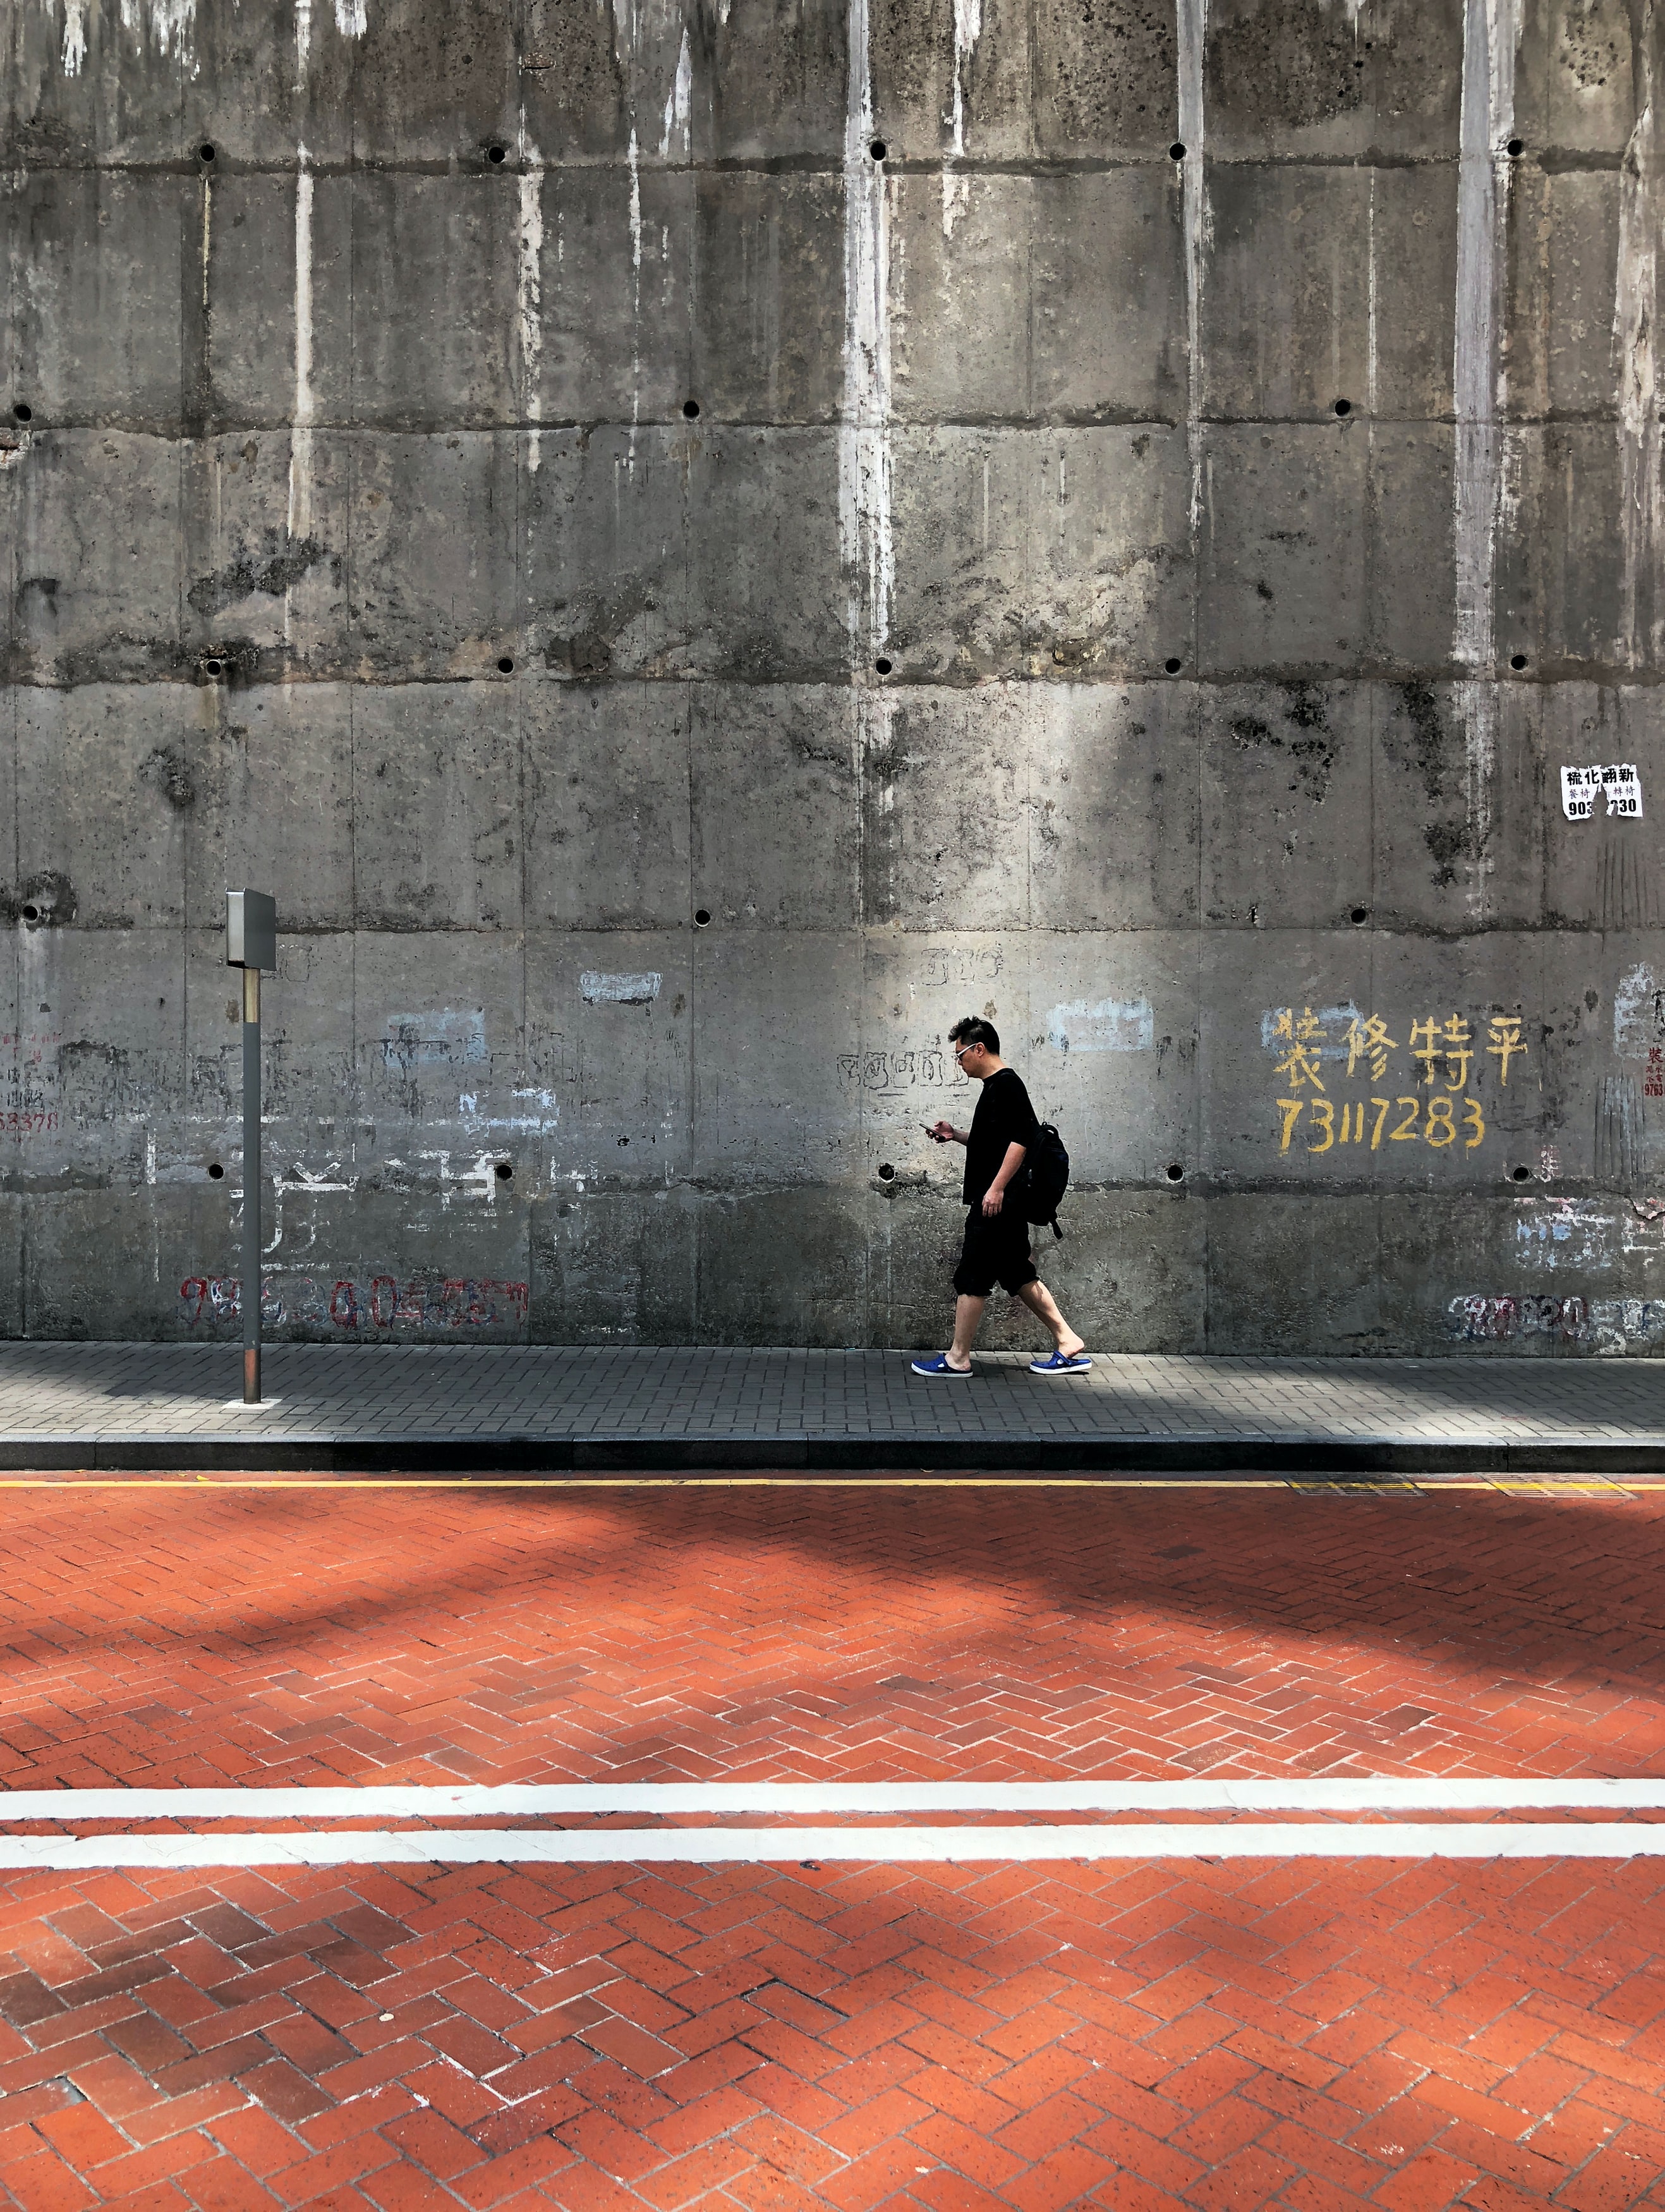 Man texting while walking; image by Pop and Zebra, via Unsplash.com.